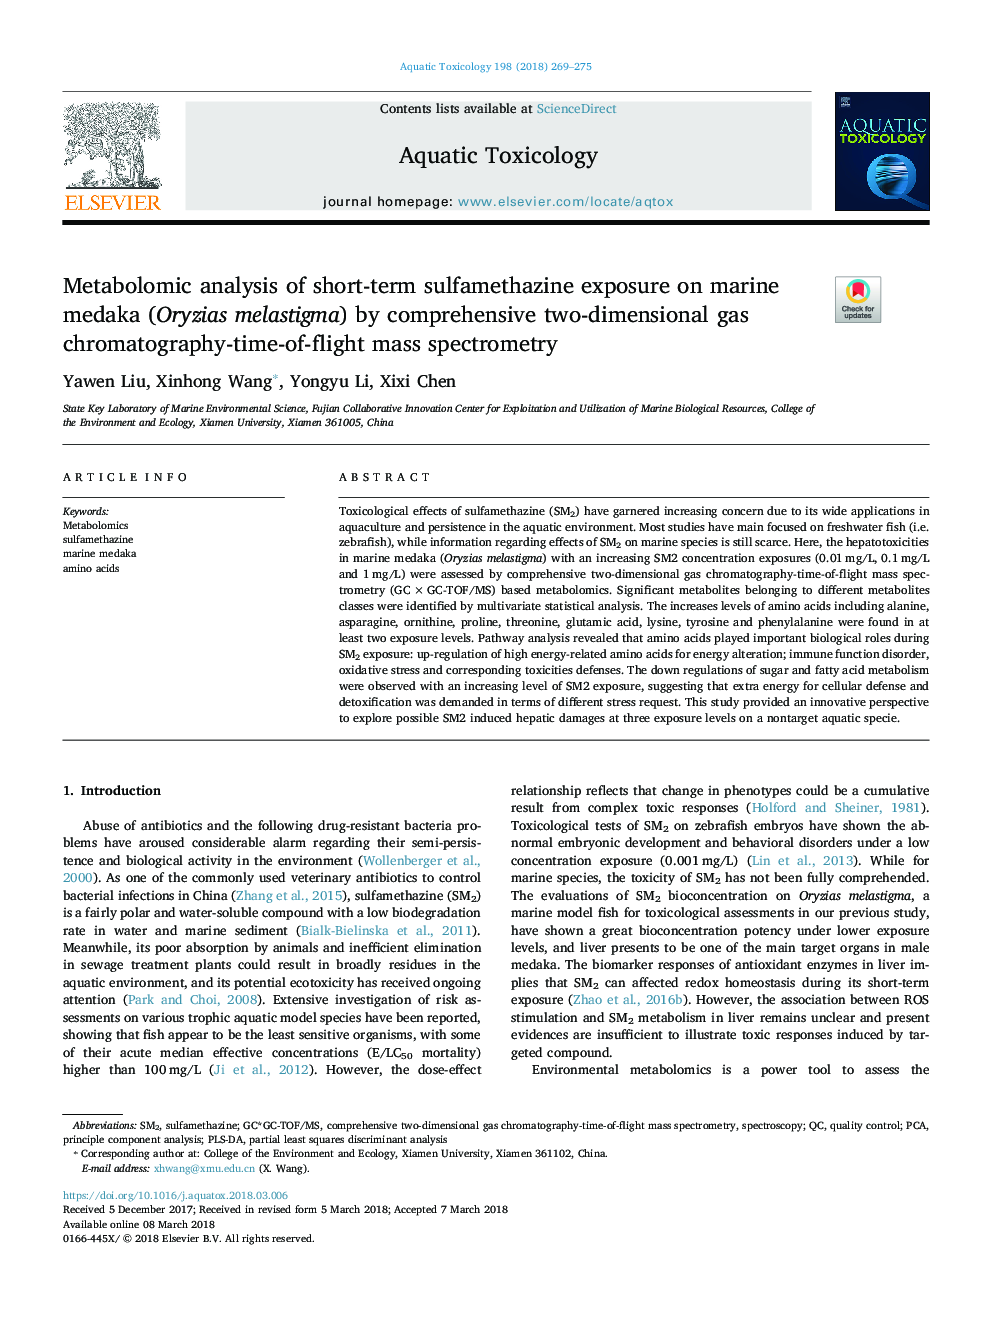 Metabolomic analysis of short-term sulfamethazine exposure on marine medaka (Oryzias melastigma) by comprehensive two-dimensional gas chromatography-time-of-flight mass spectrometry